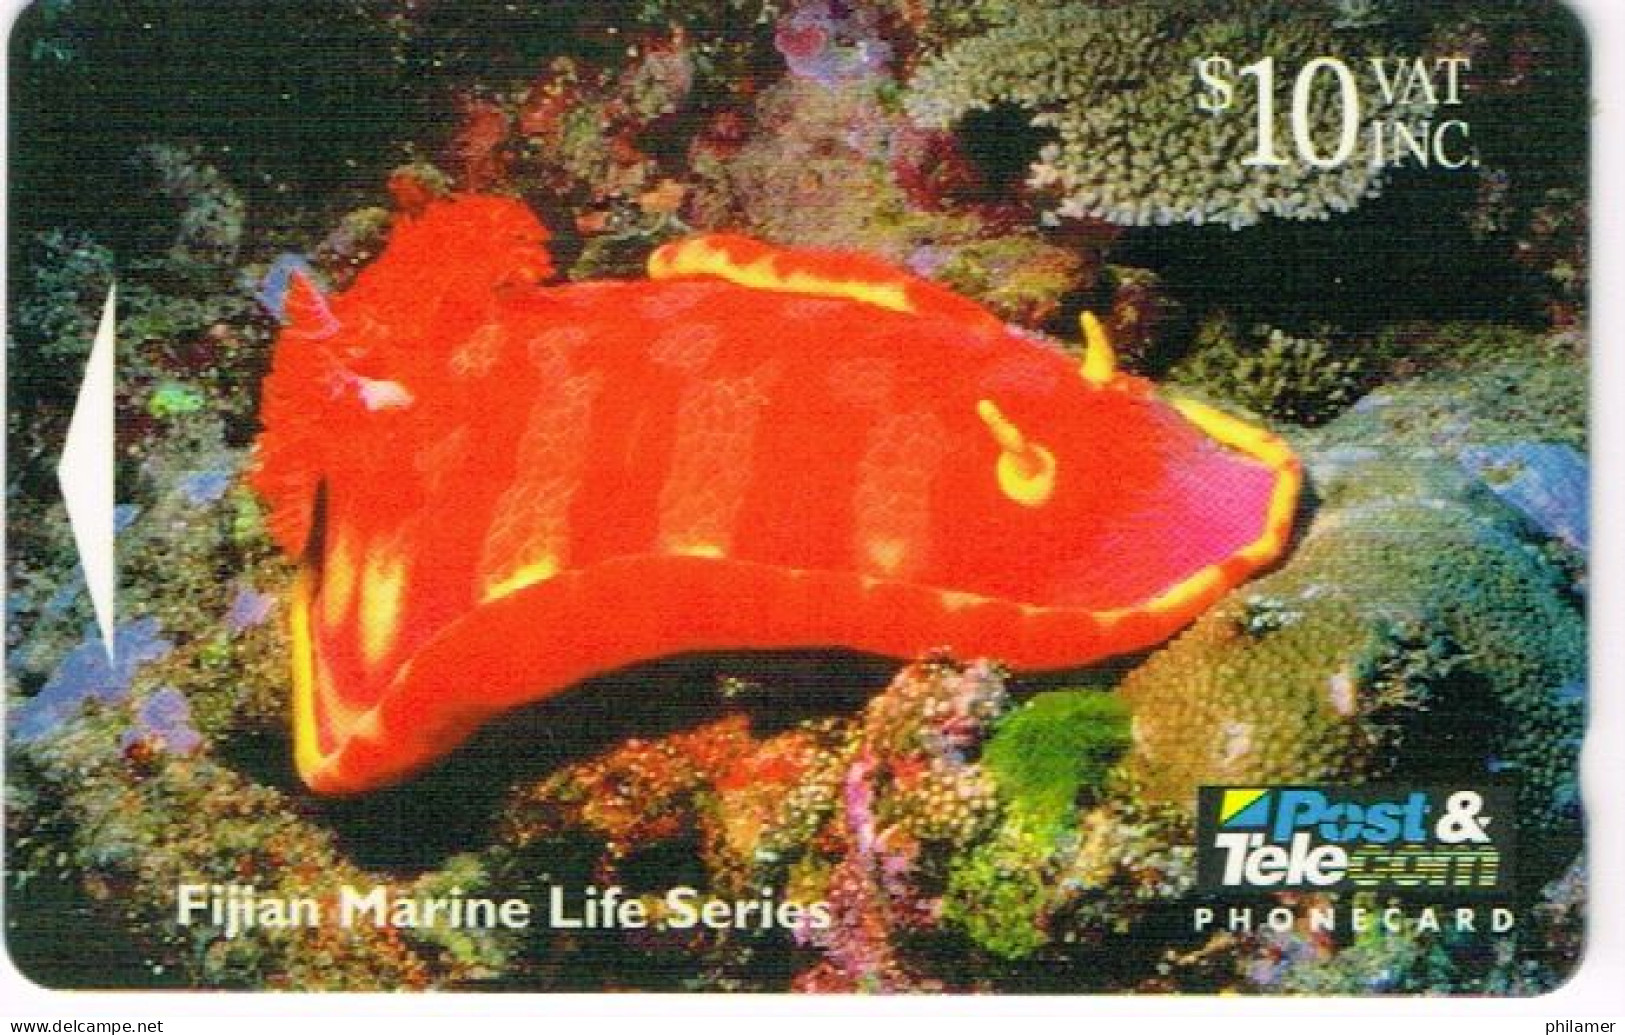 Fidji Fiji TELECARTE PHONECARD Telecom Marine Serie Sea Slug Limace Mer Nudibranch Recif Reef 1995 2 Dollars Ut BE - Fidji